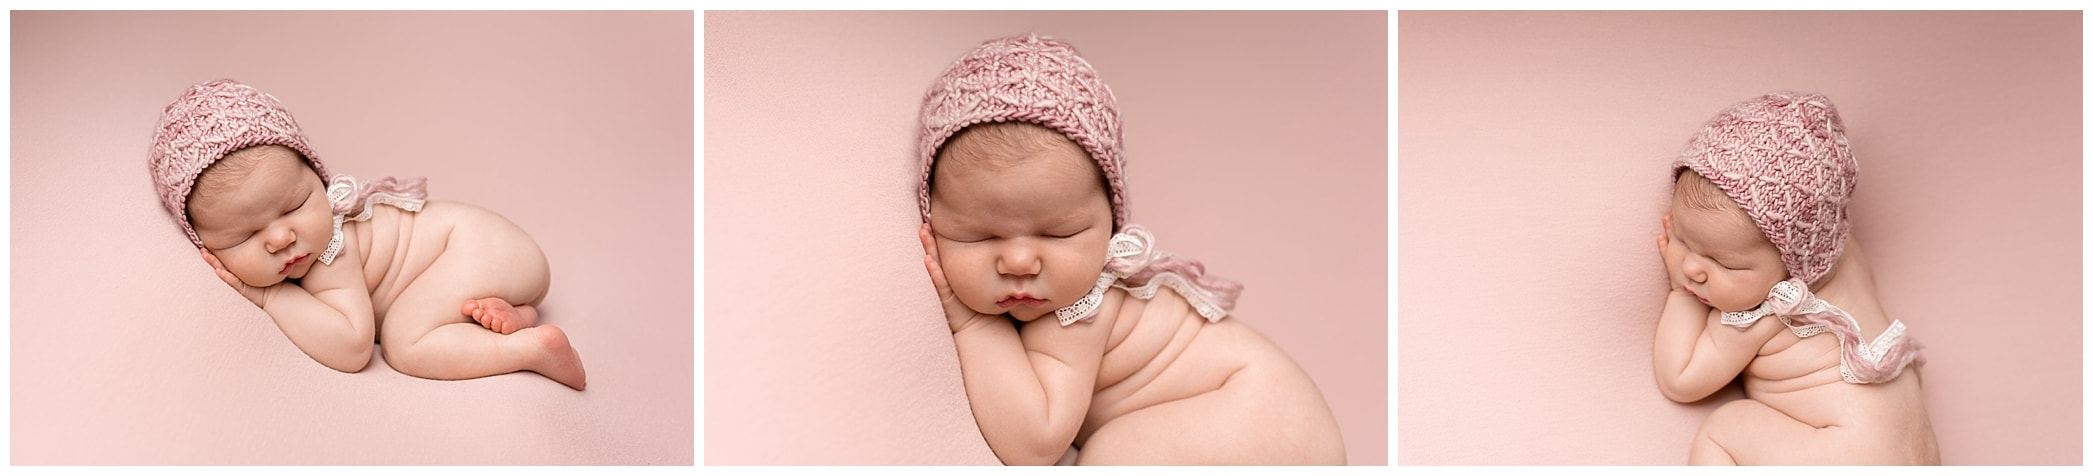 Baby girl in tushie pose on pink blanket